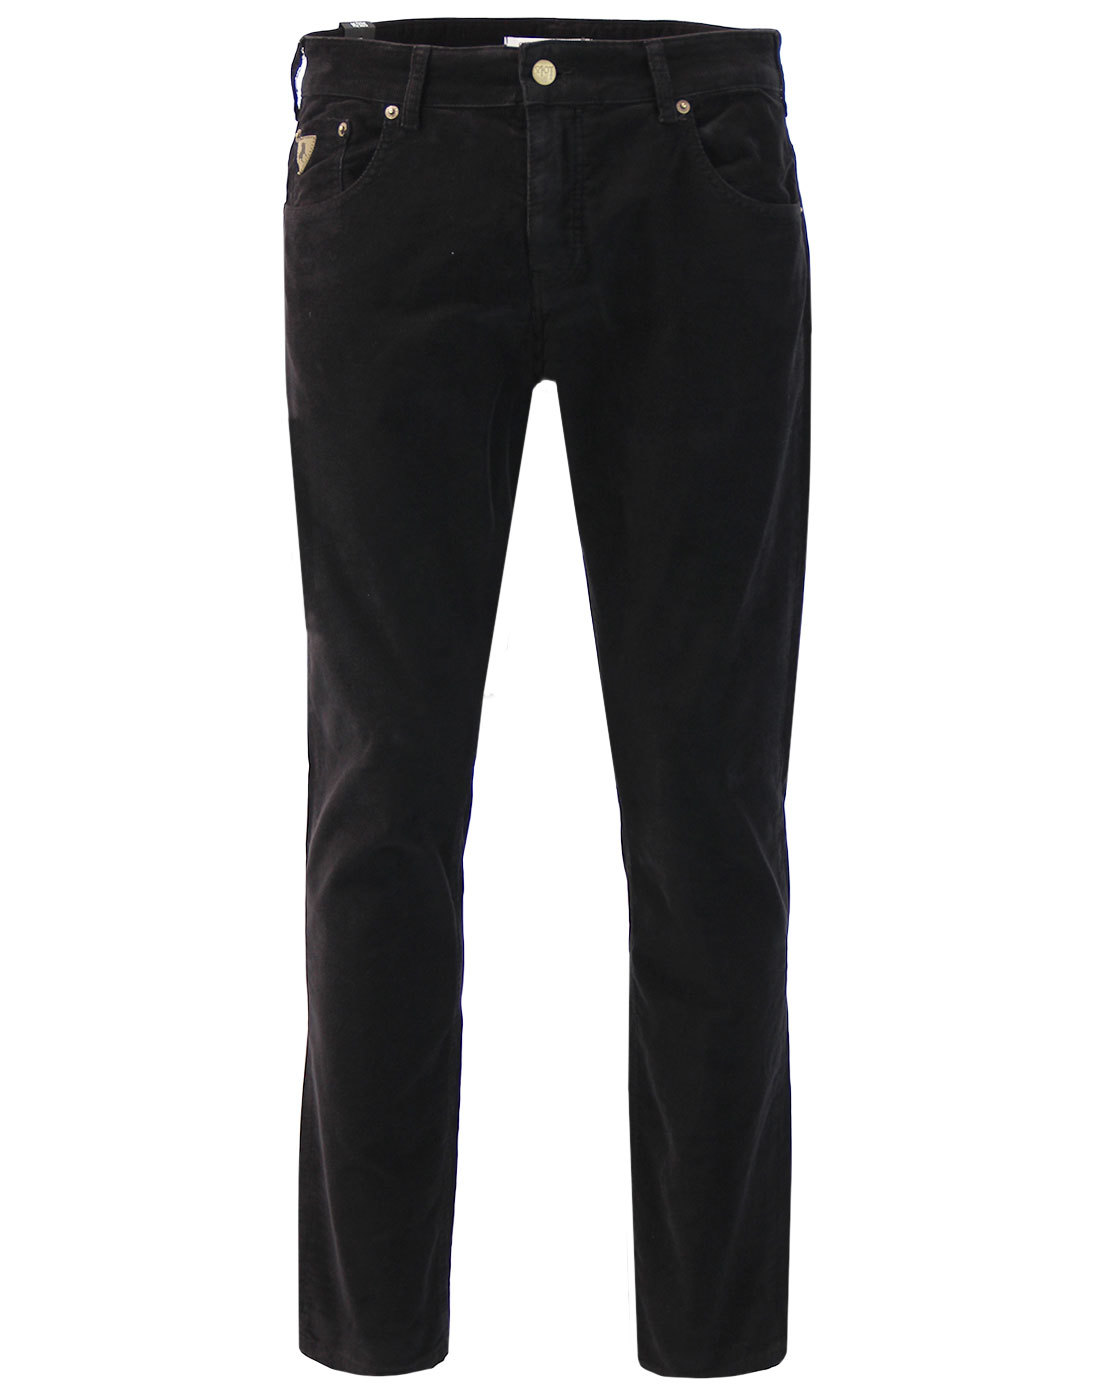 Sierra LOIS Mod Casuals Needle Cord Trousers BLACK